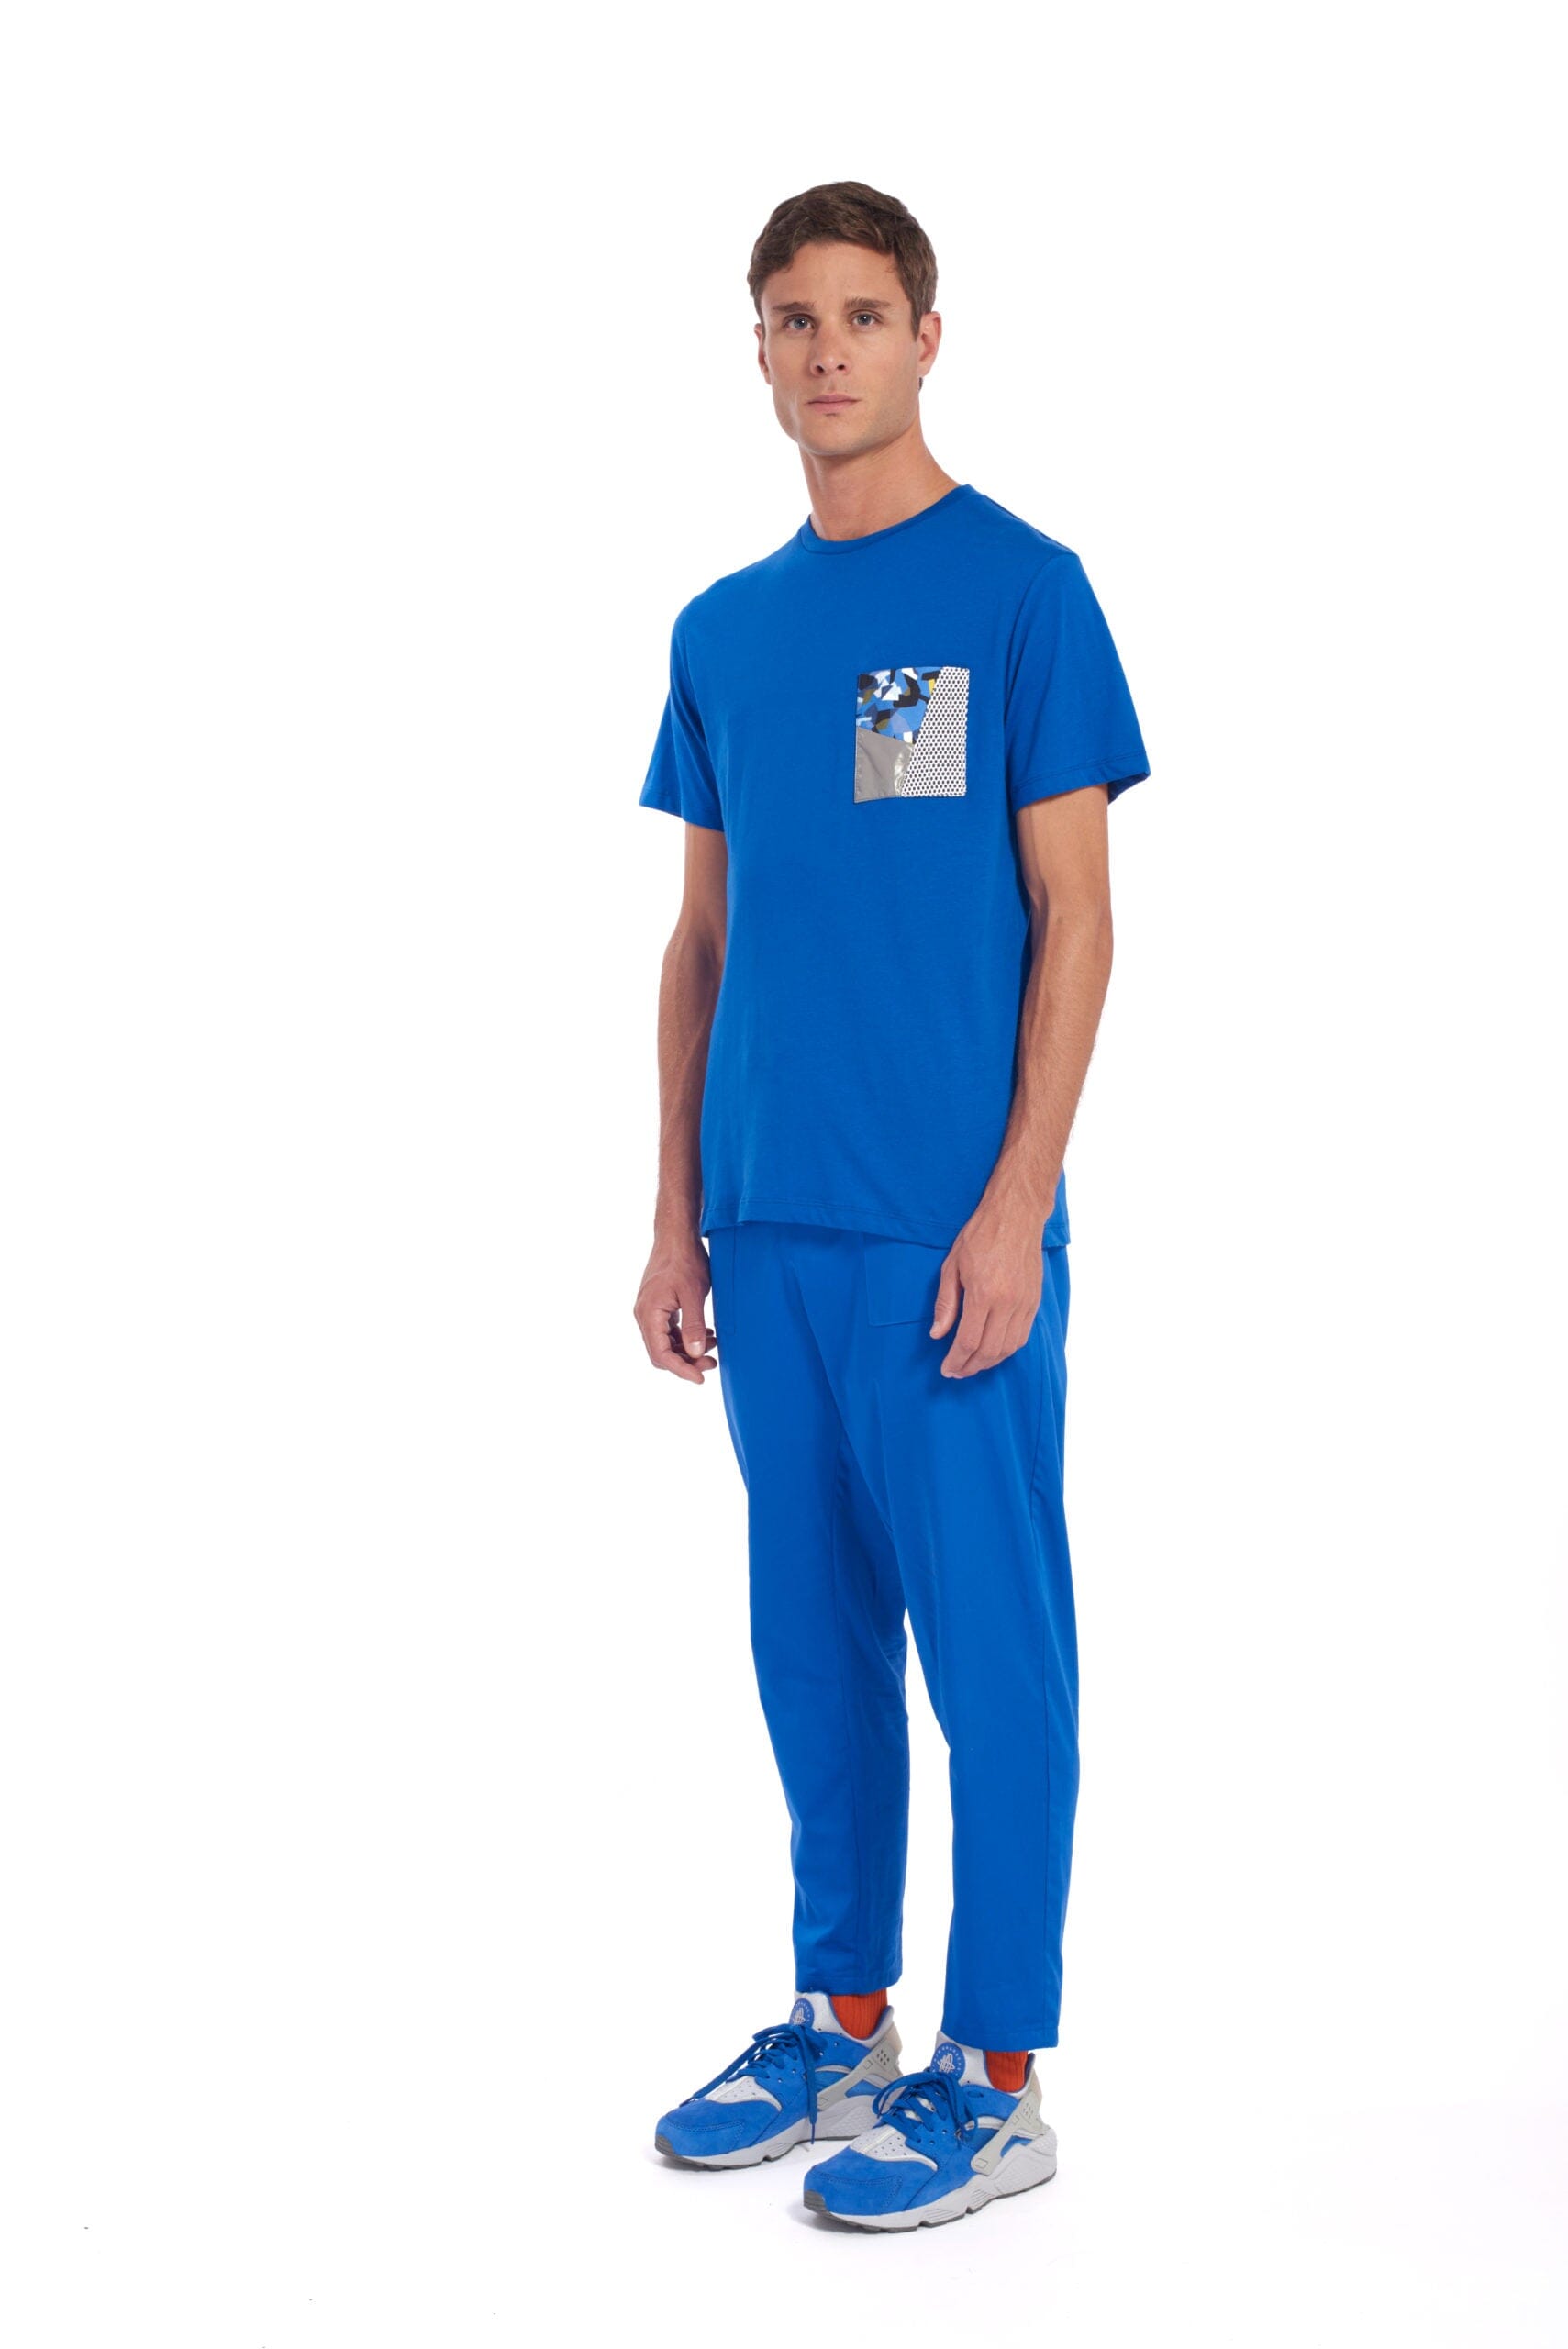 Jimba - Blue T-shirt LaurenceAirline 